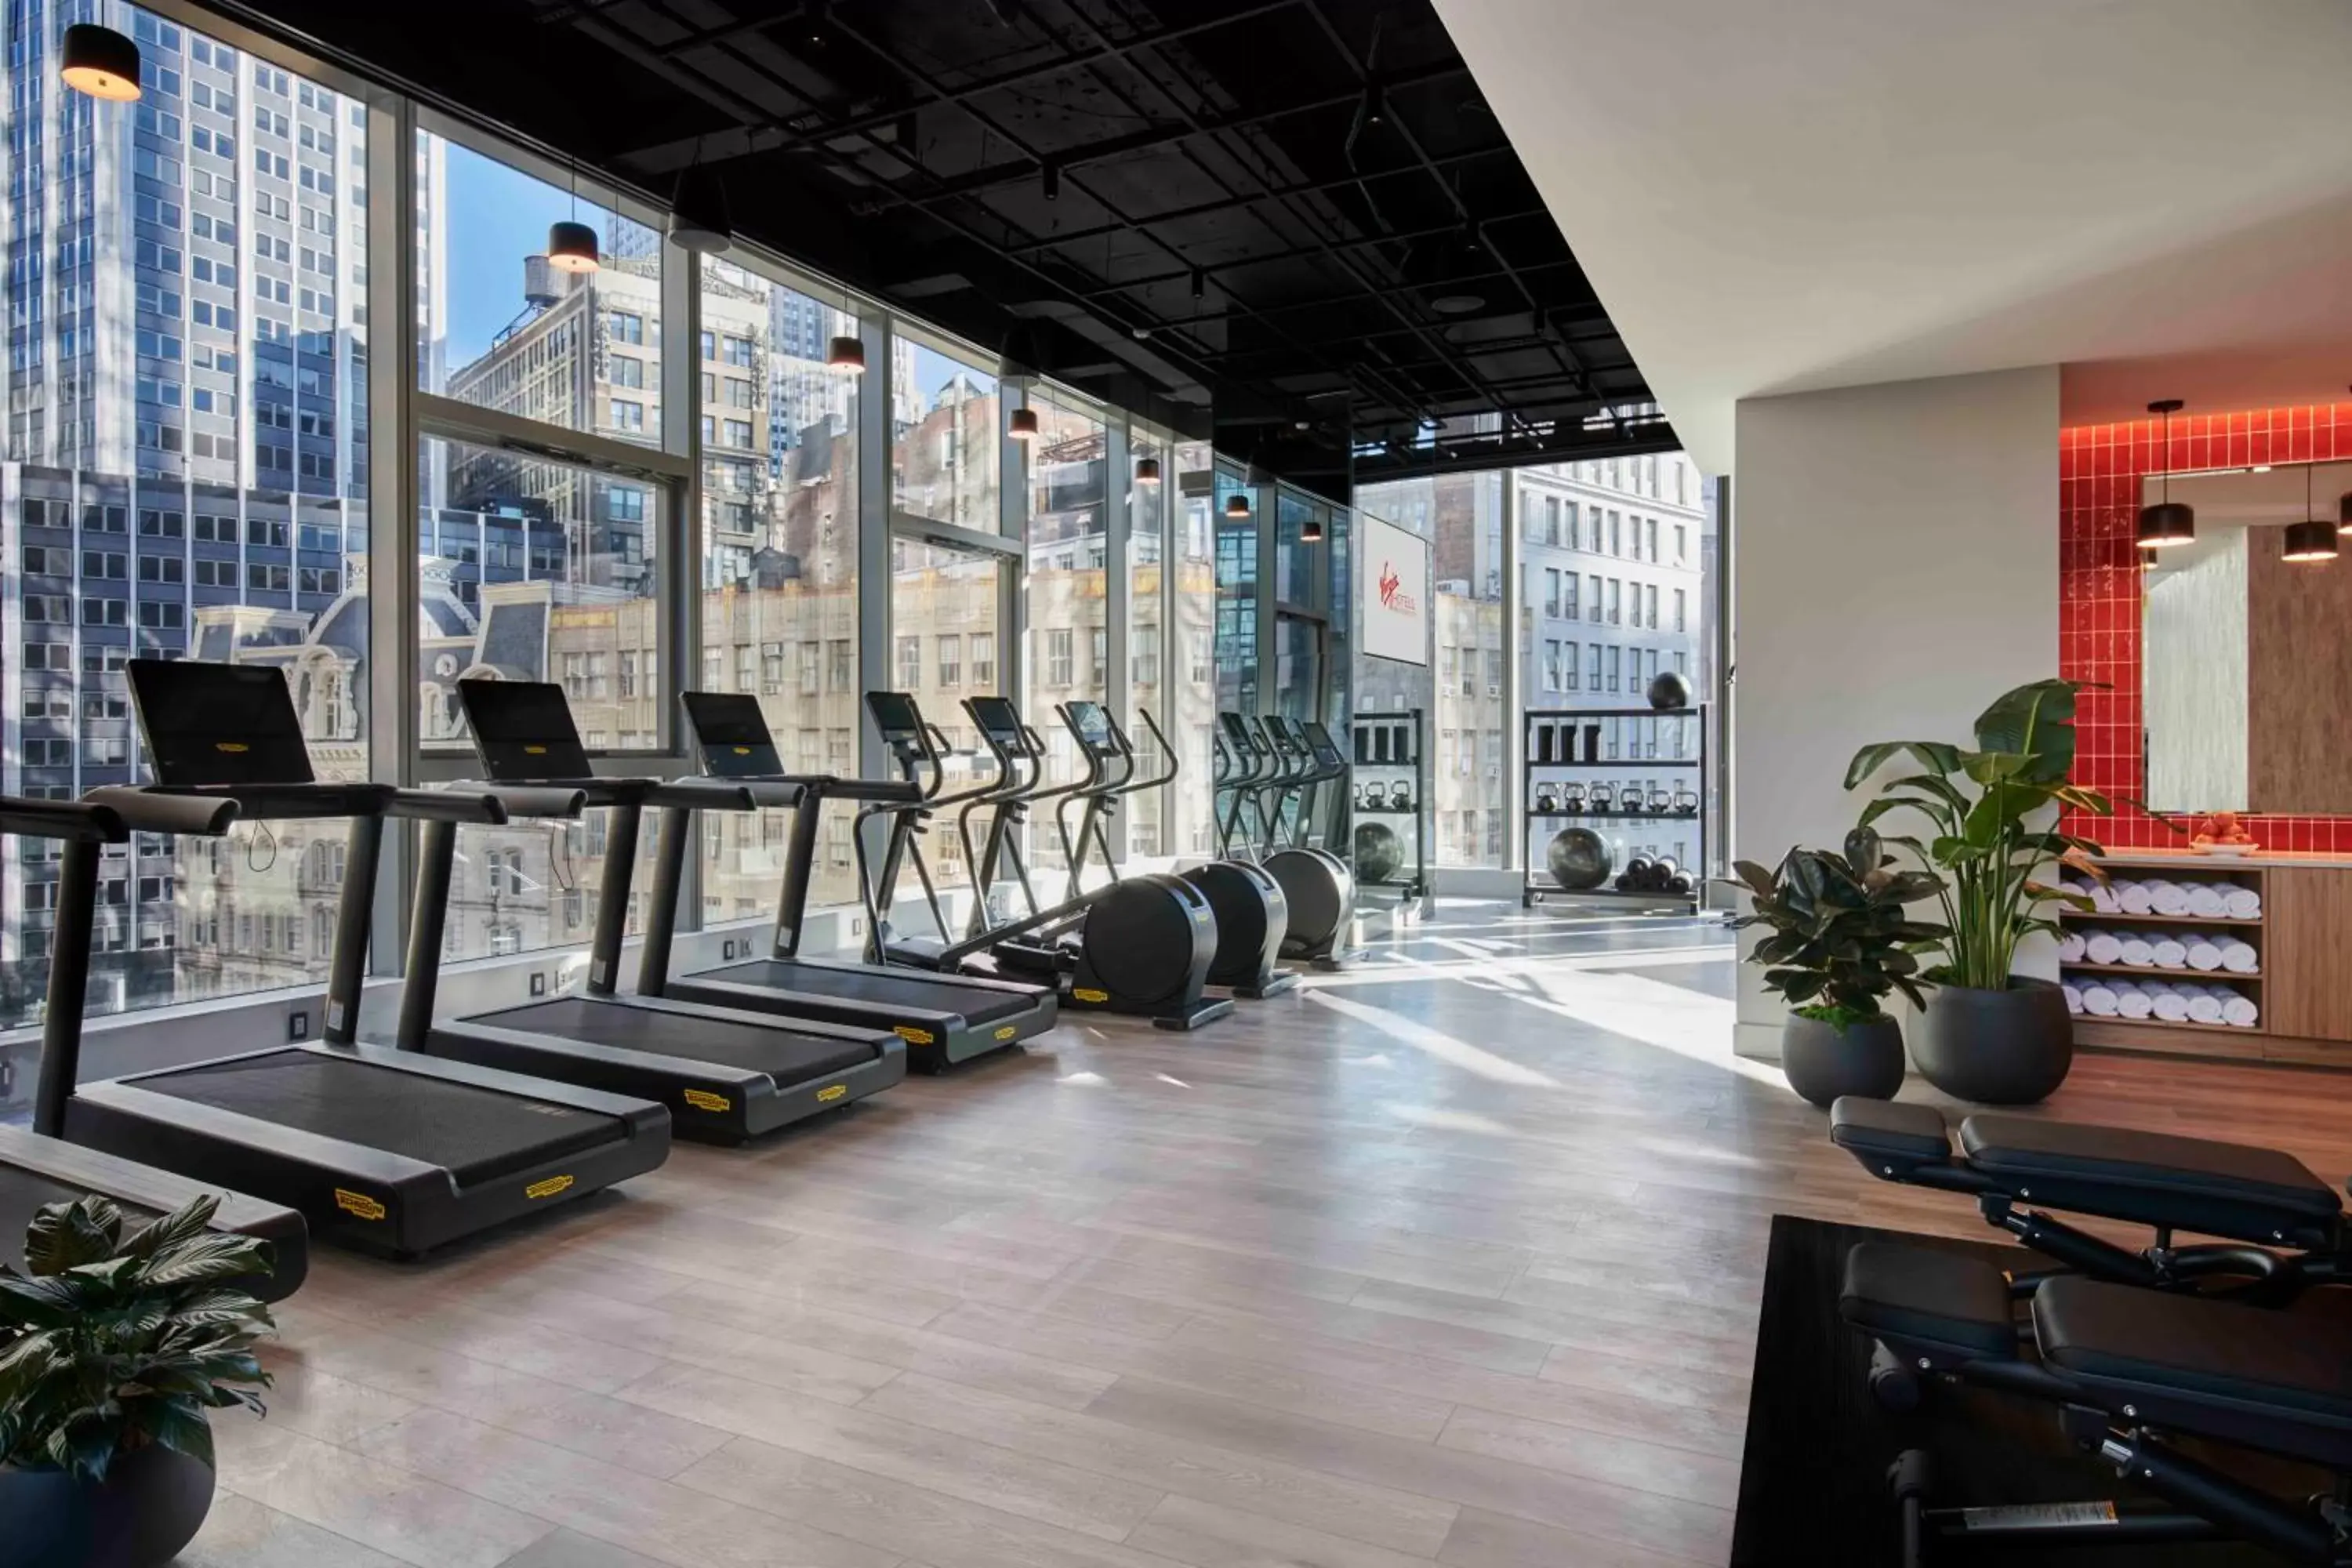 Fitness centre/facilities, Fitness Center/Facilities in Virgin Hotels New York City